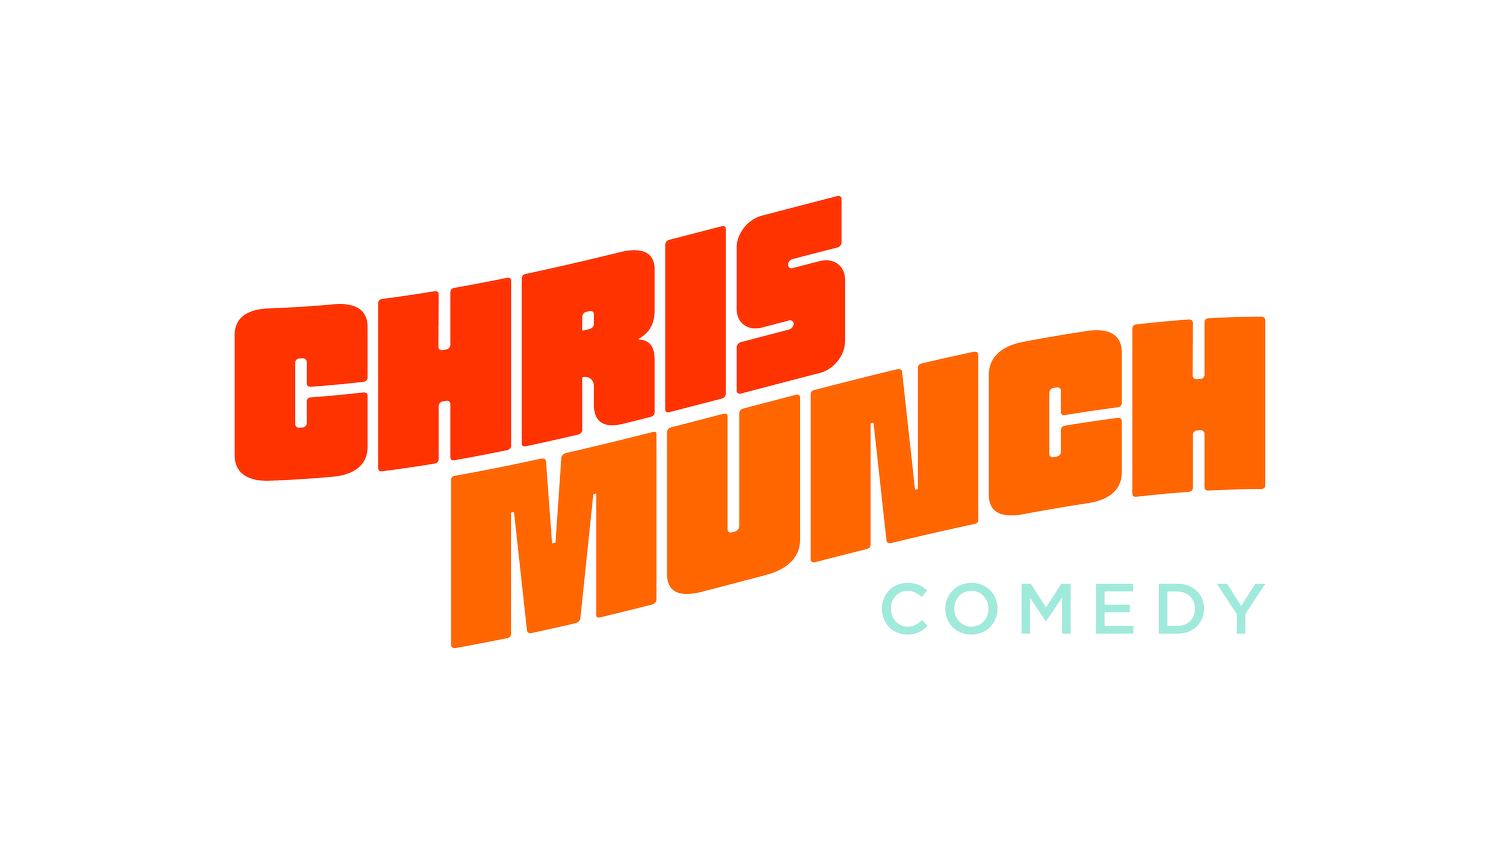 Chris Munch Comedy